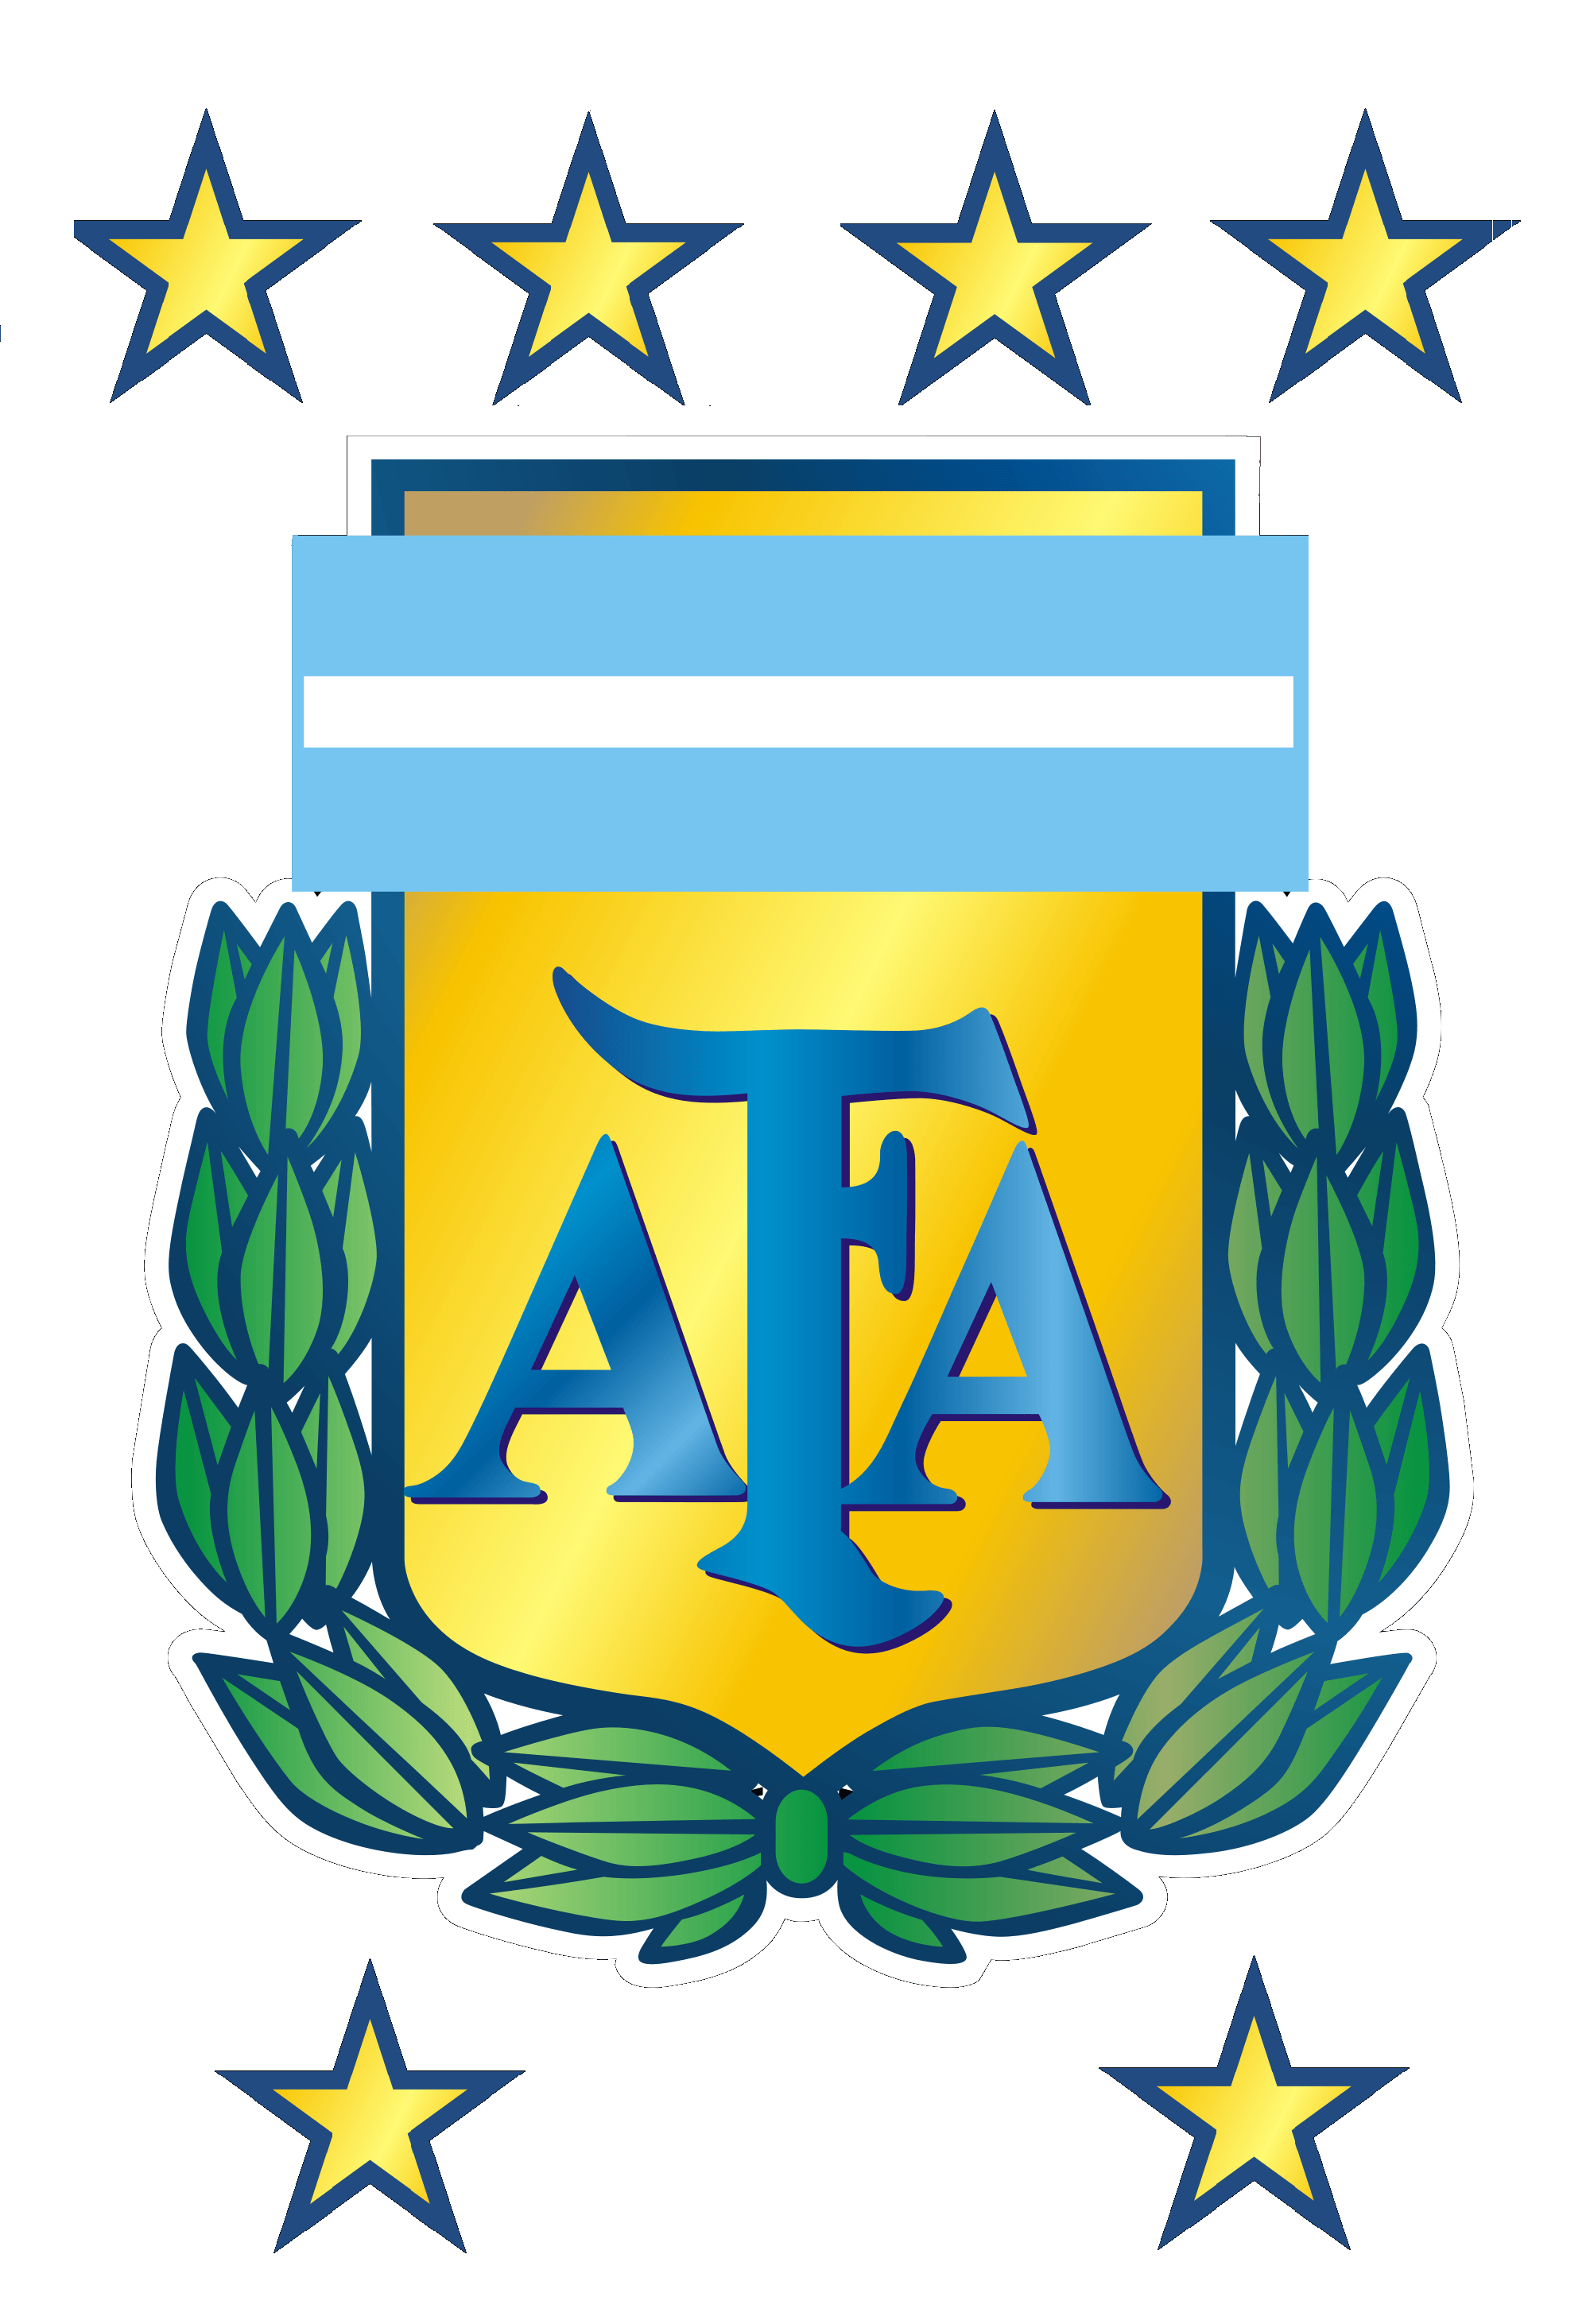 Argentina Logo - Afa Team Logo PNG Transparent Afa Team Logo.PNG Images. | PlusPNG